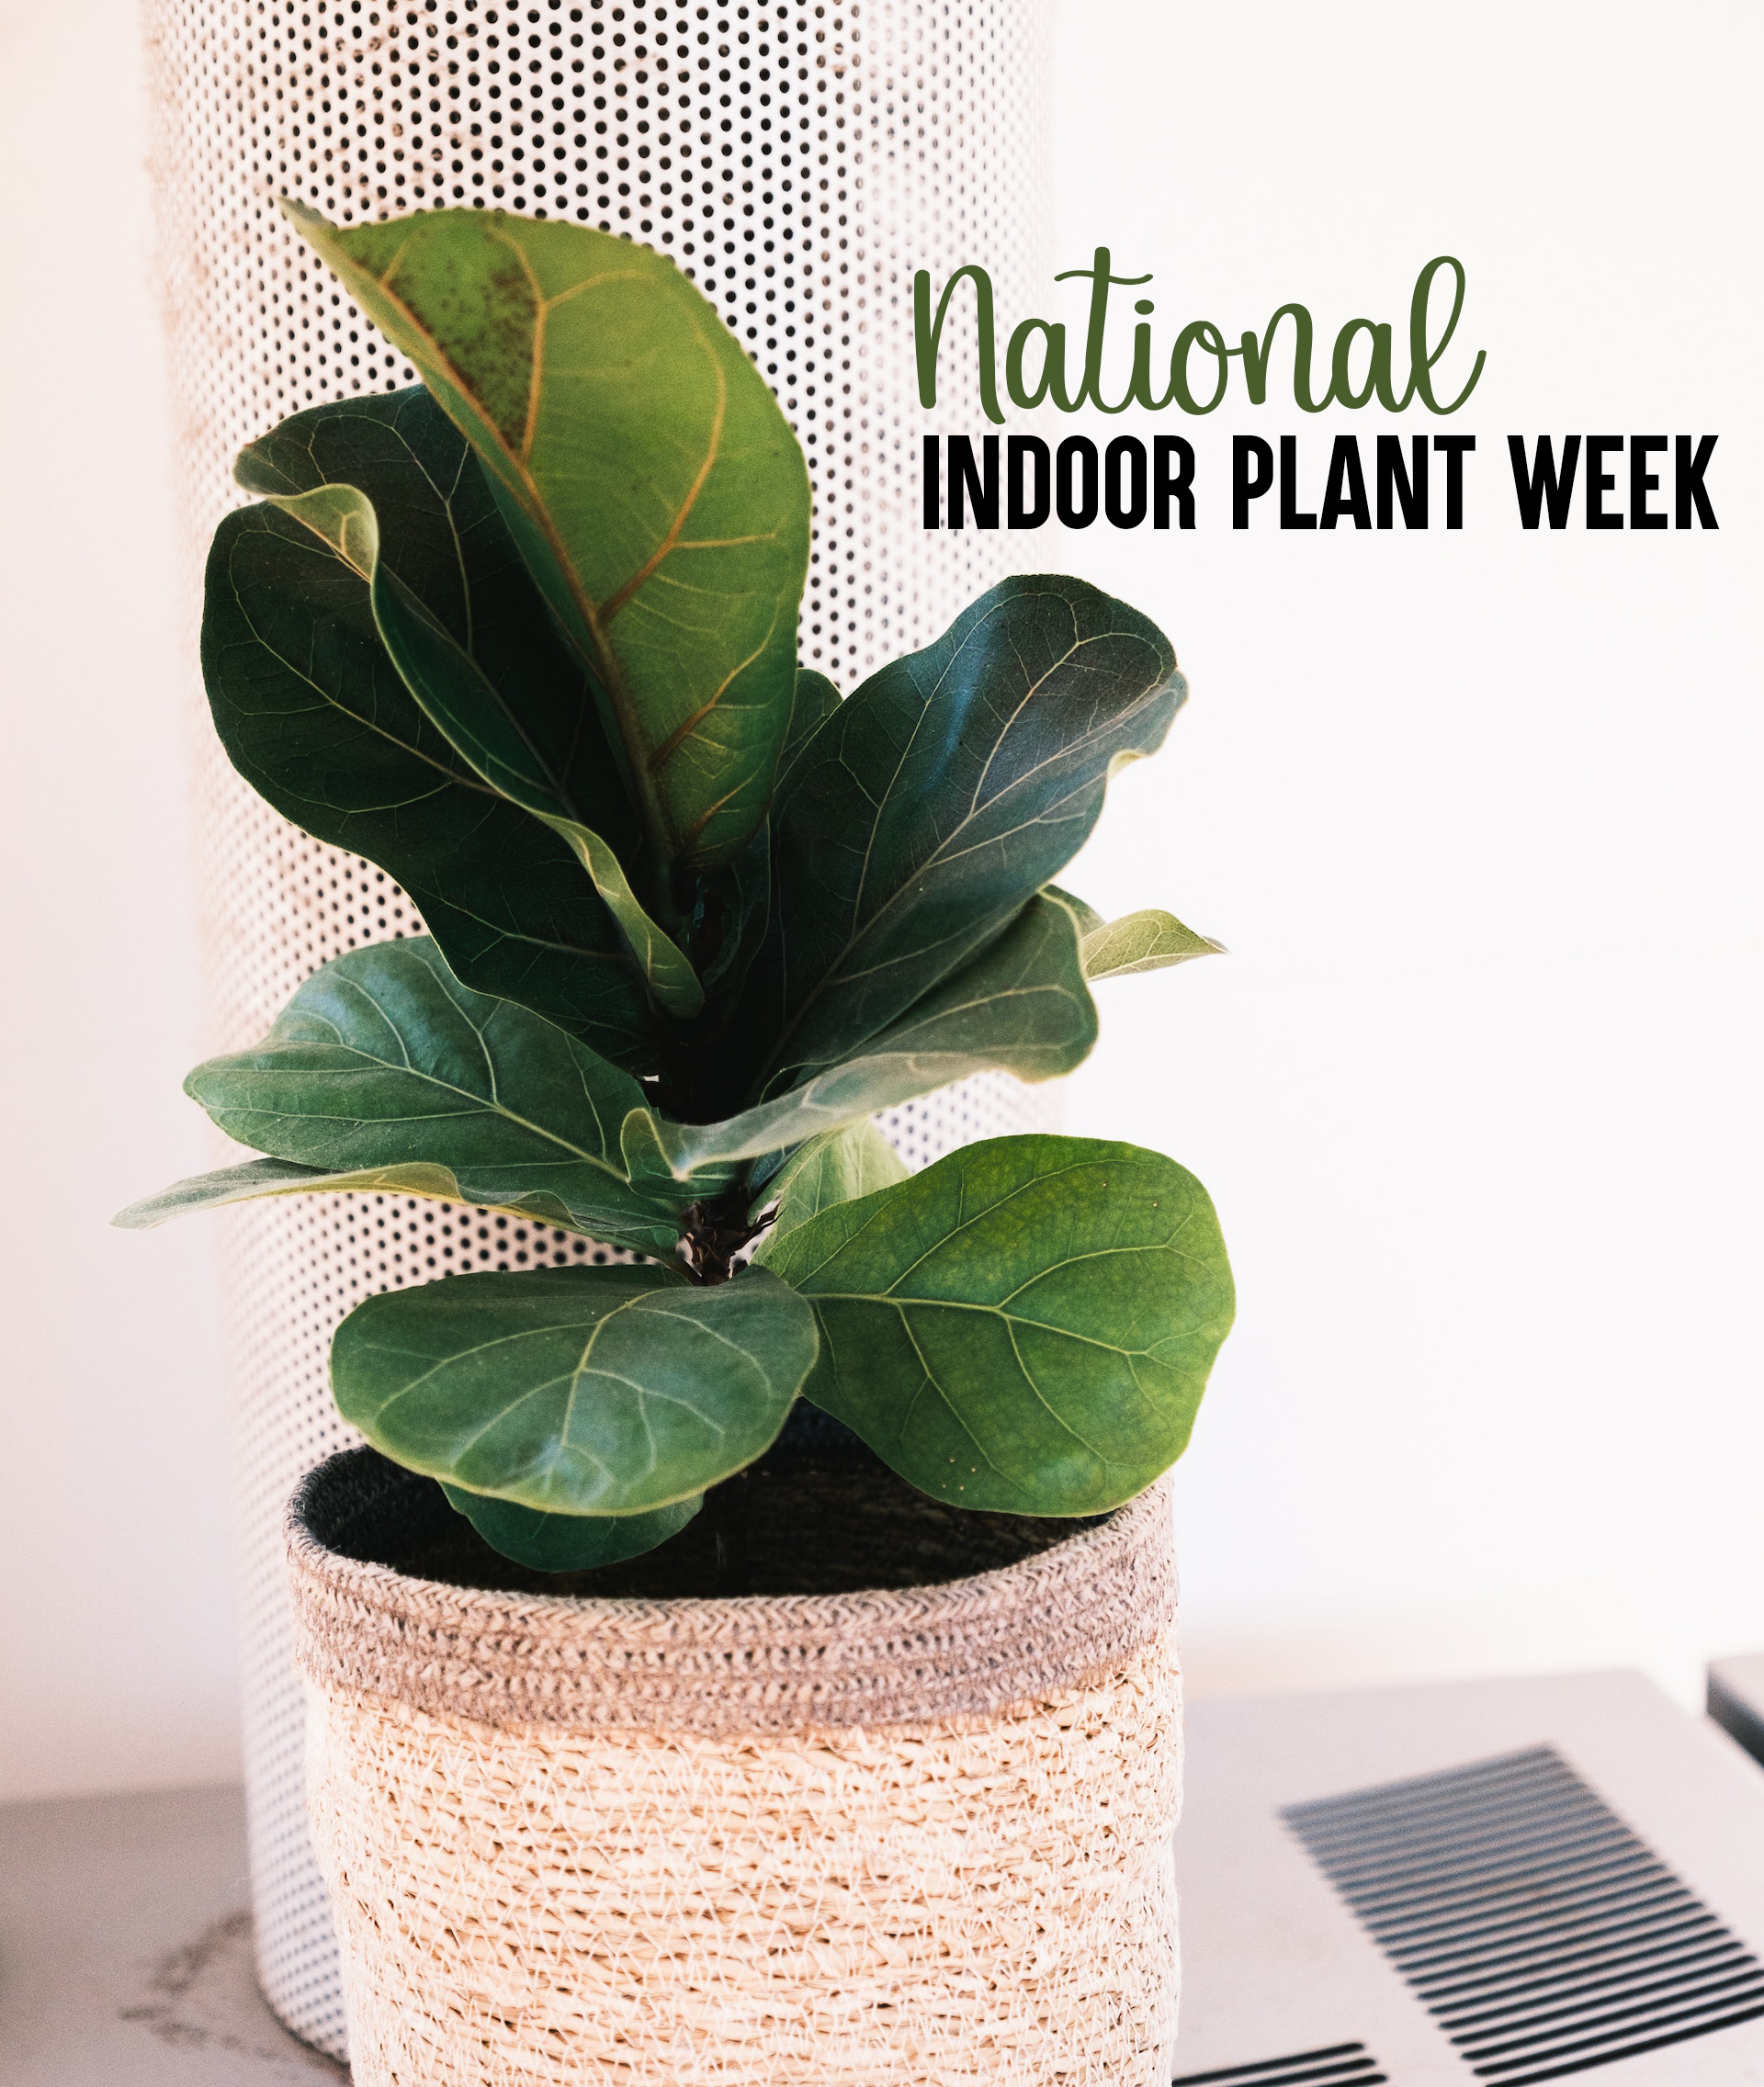 National Indoor Plant Week